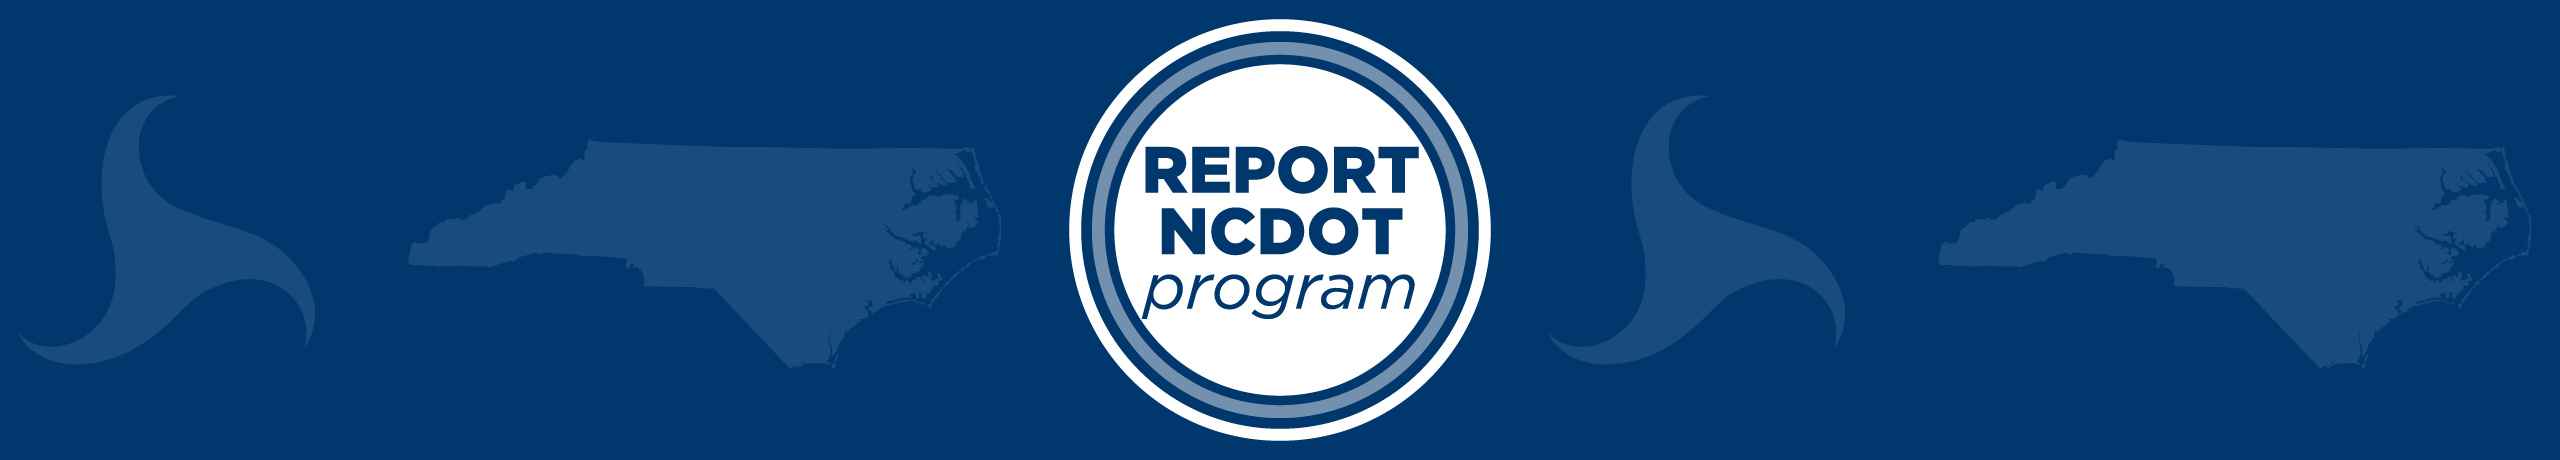 NCDOT Logo - logos - All Items: Flat View